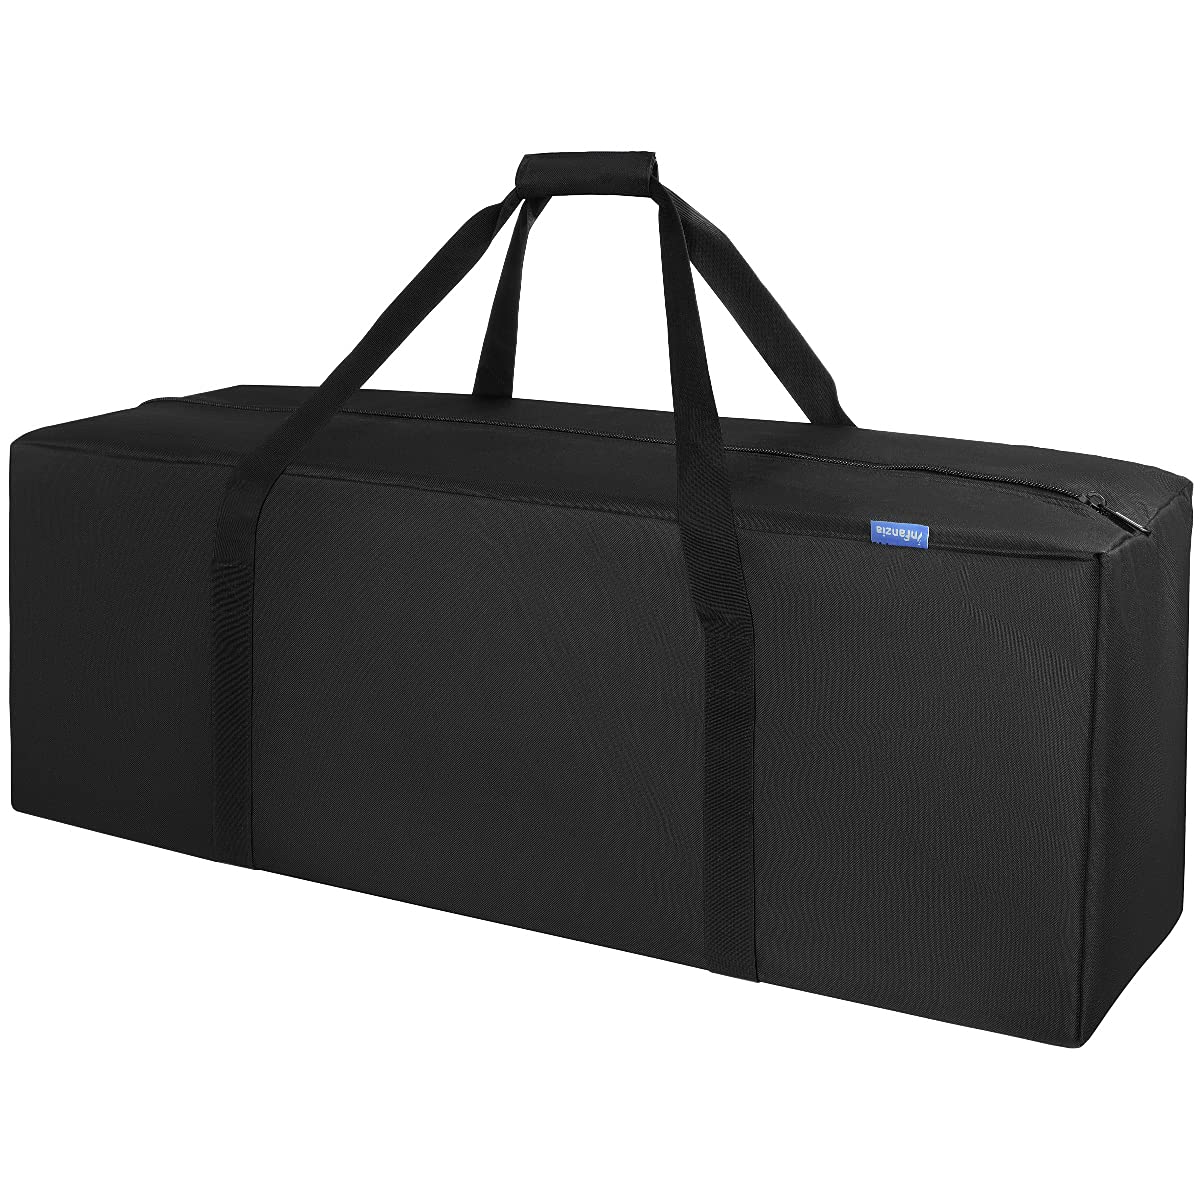 Sports Duffel bag-oversized travel duffel bag, upgraded zipper, durable waterproof, black